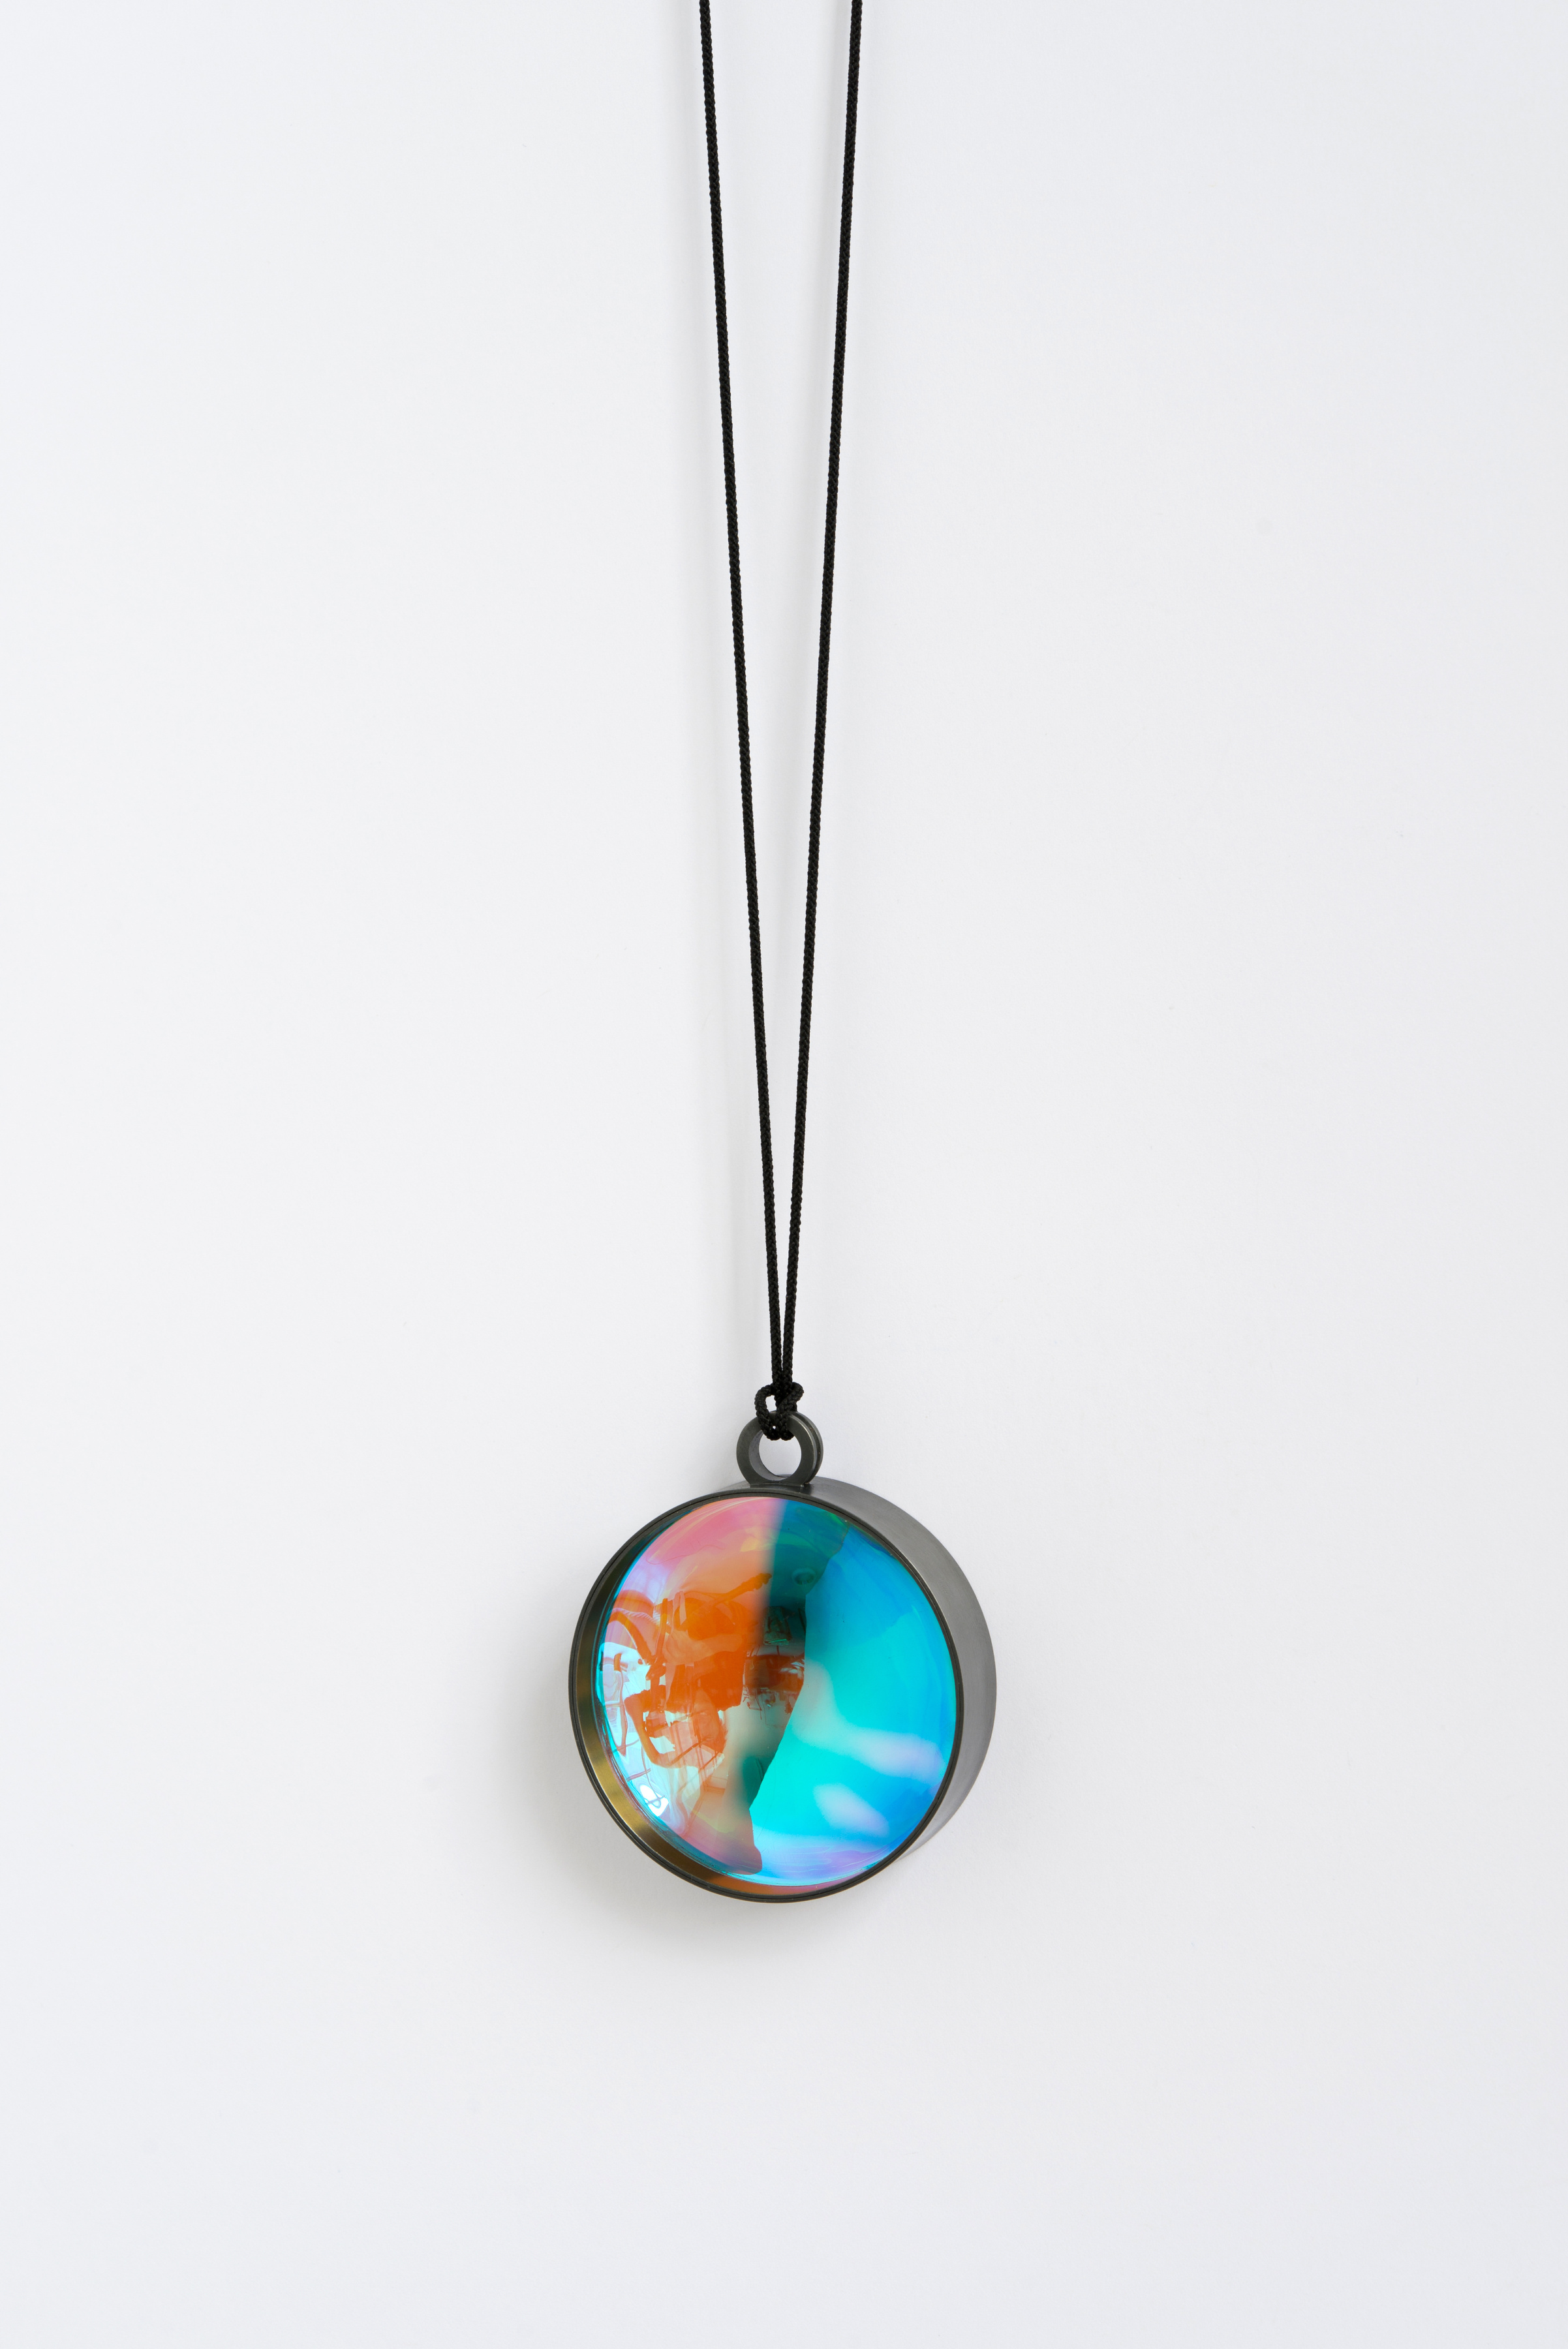 Jiro Kamata, Dichroic, glass, pendant